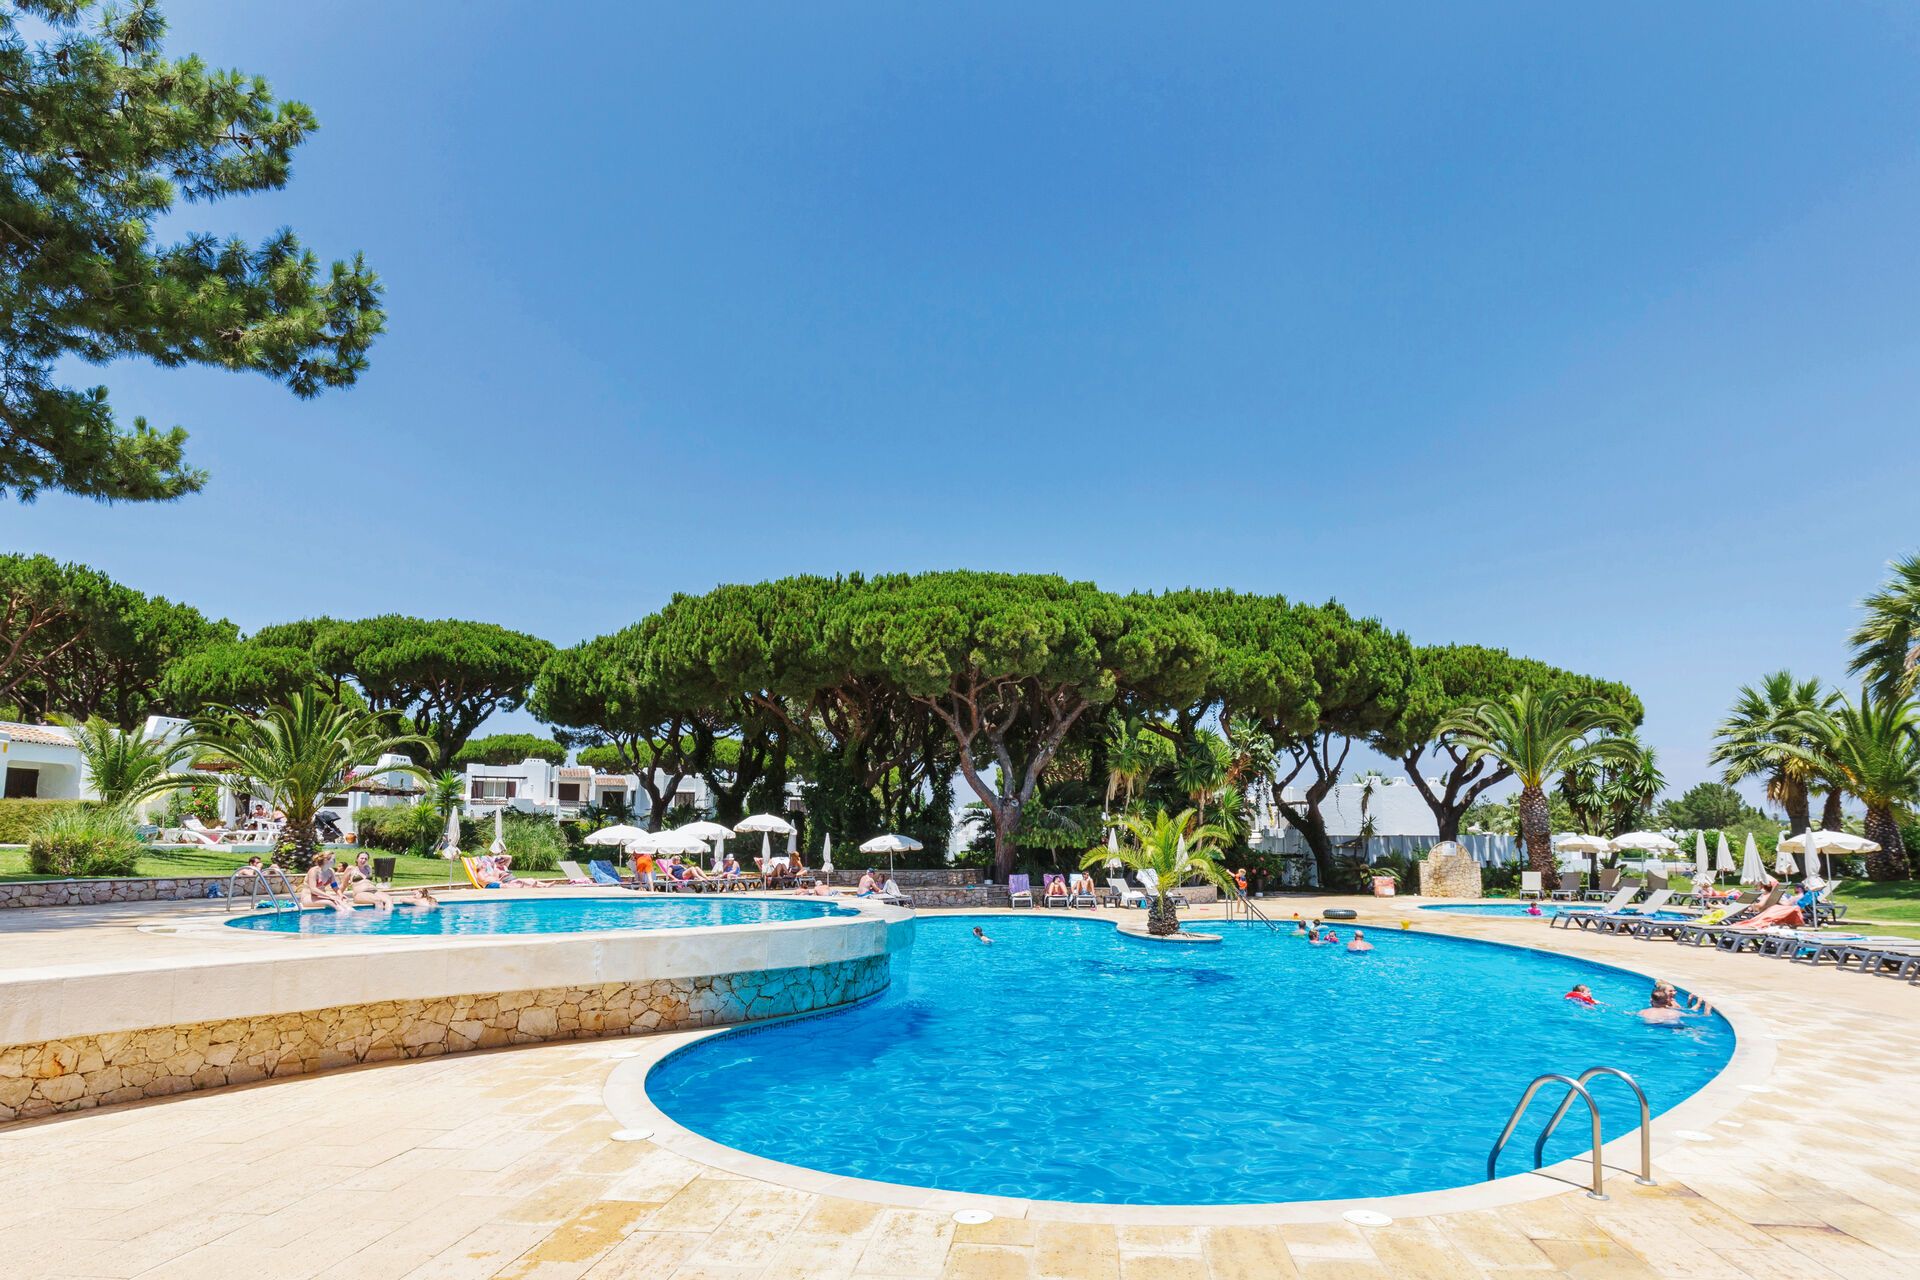 Portugal - Algarve - Albufeira - Hotel Balaia Golf Village 4*